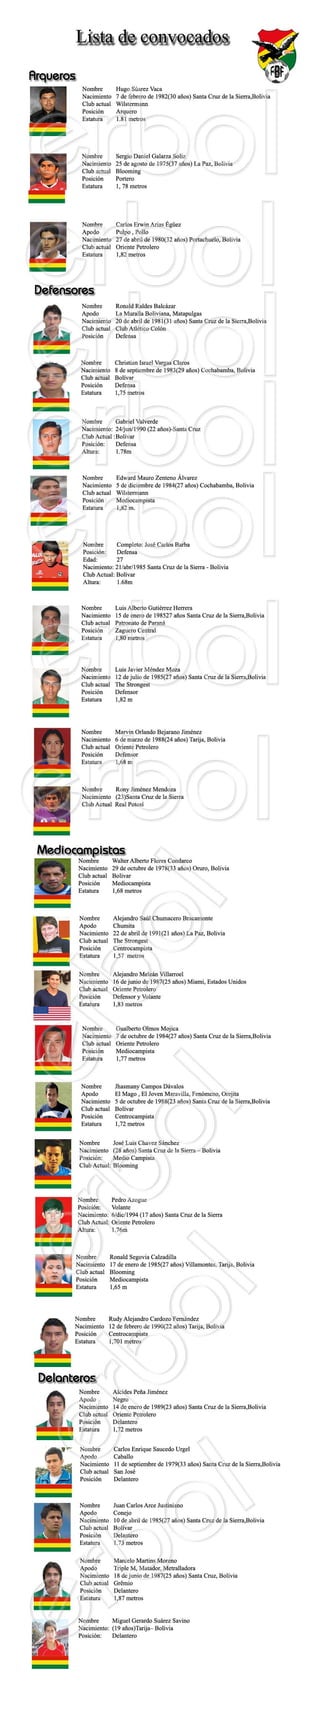 Lista convocados Seleccion Boliviana de Futbol